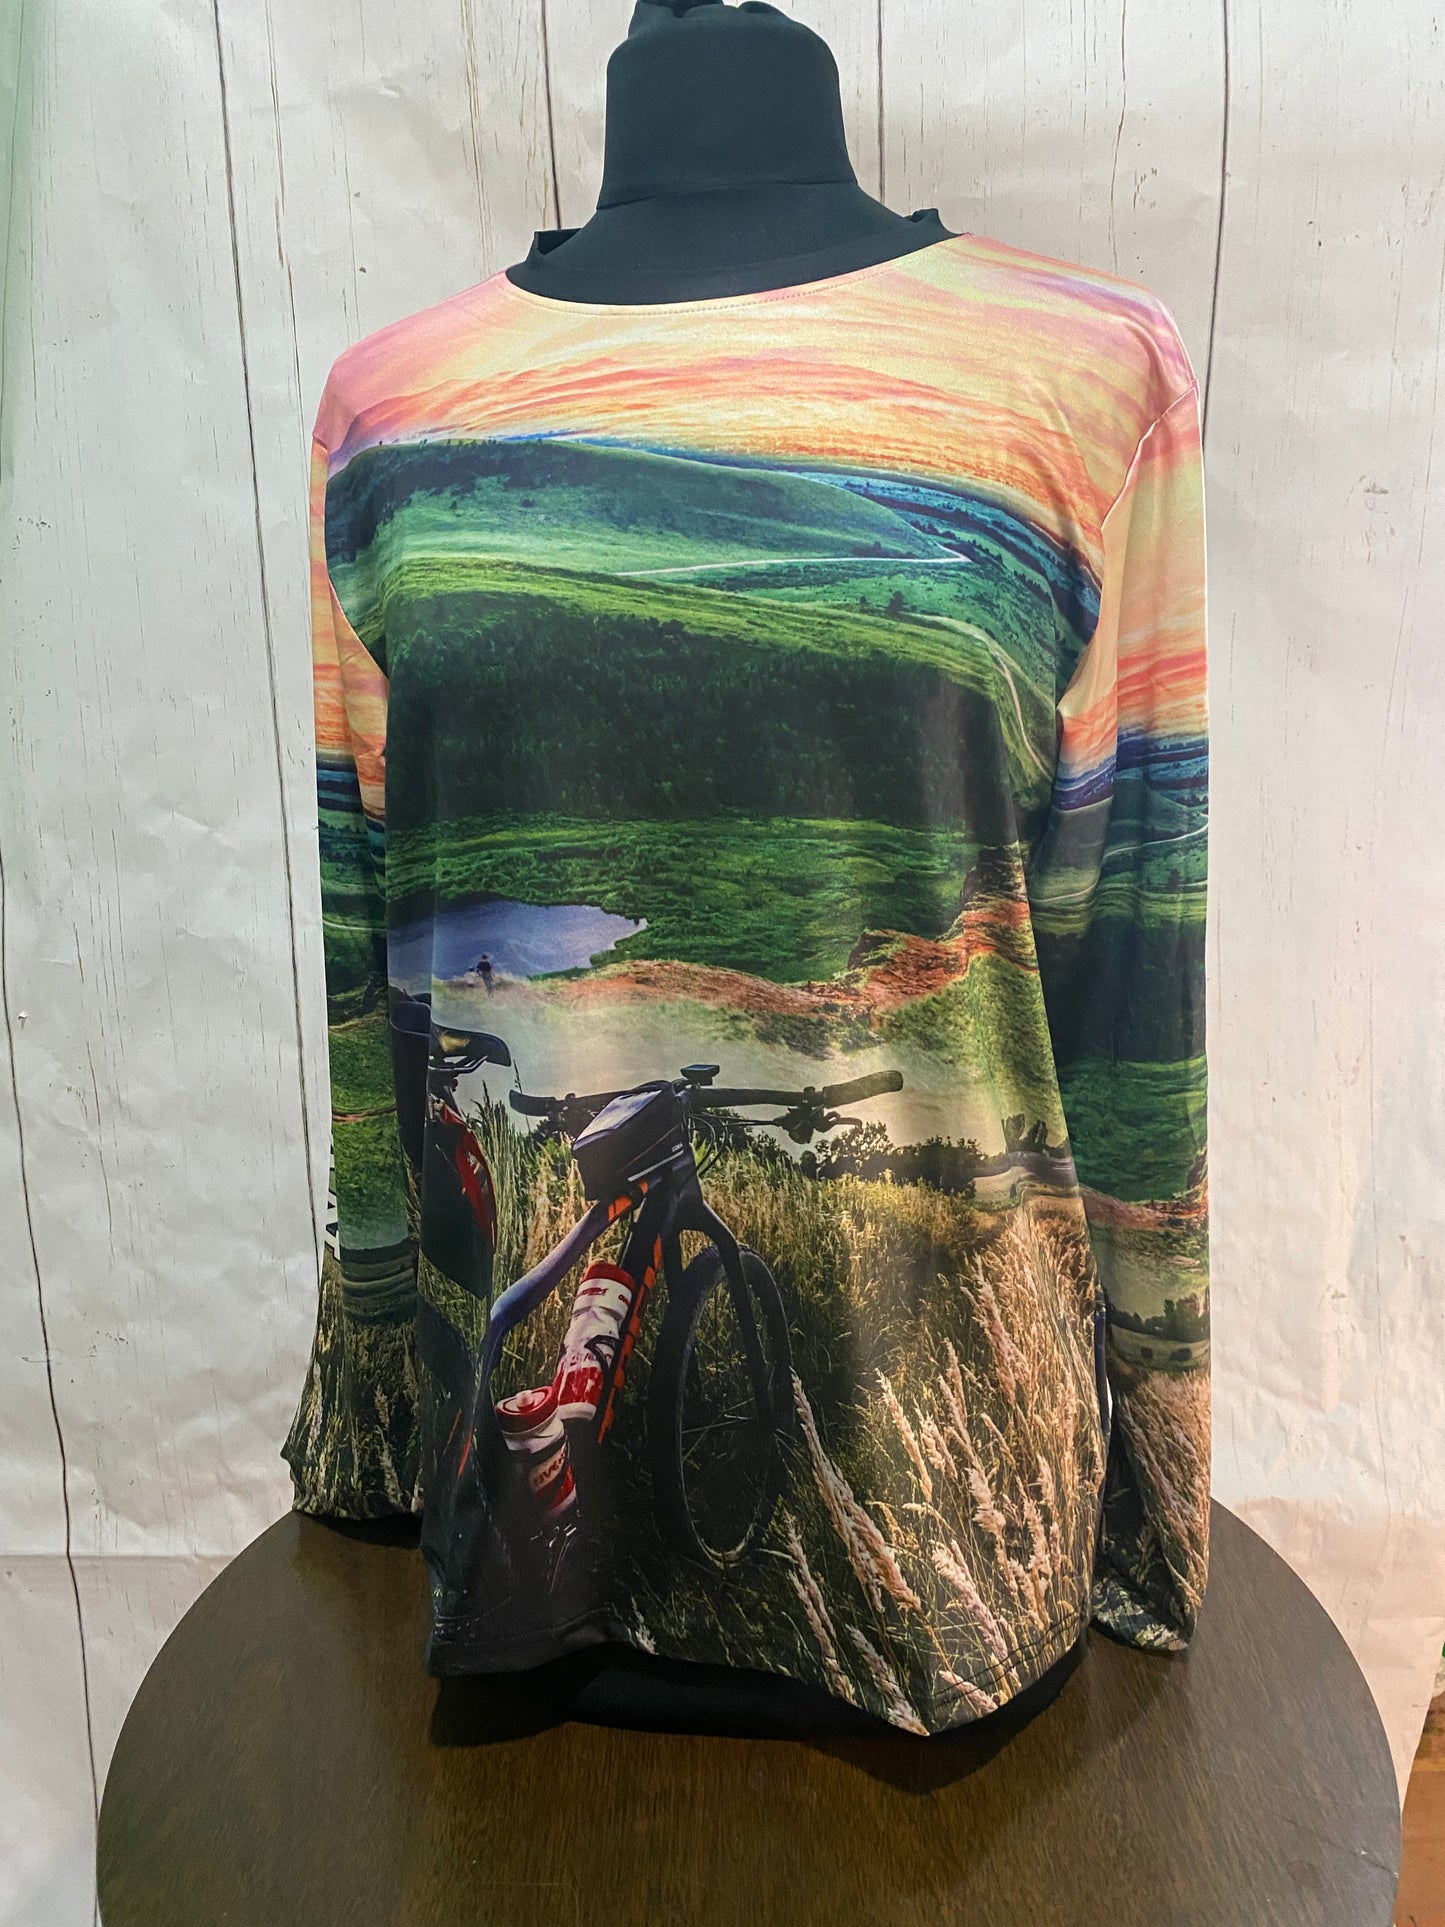 Upper Peninsula Mountain Biker Unisex Long-Sleeve Performance Tee Bike Shirt